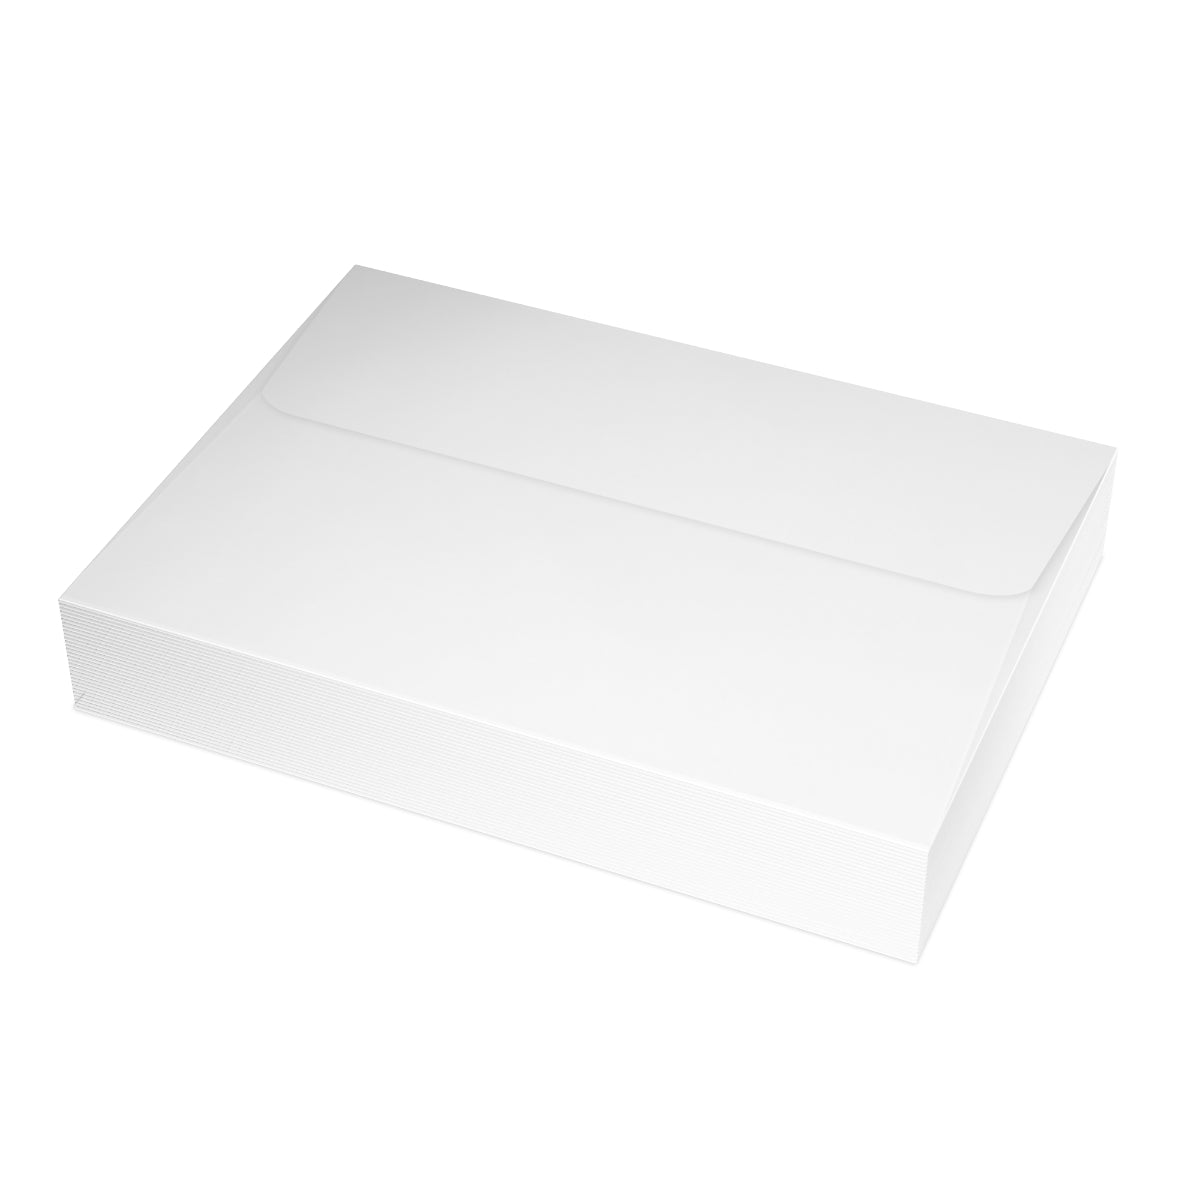 Le Luberon Folded Matte Notecards + Envelopes (10pcs)